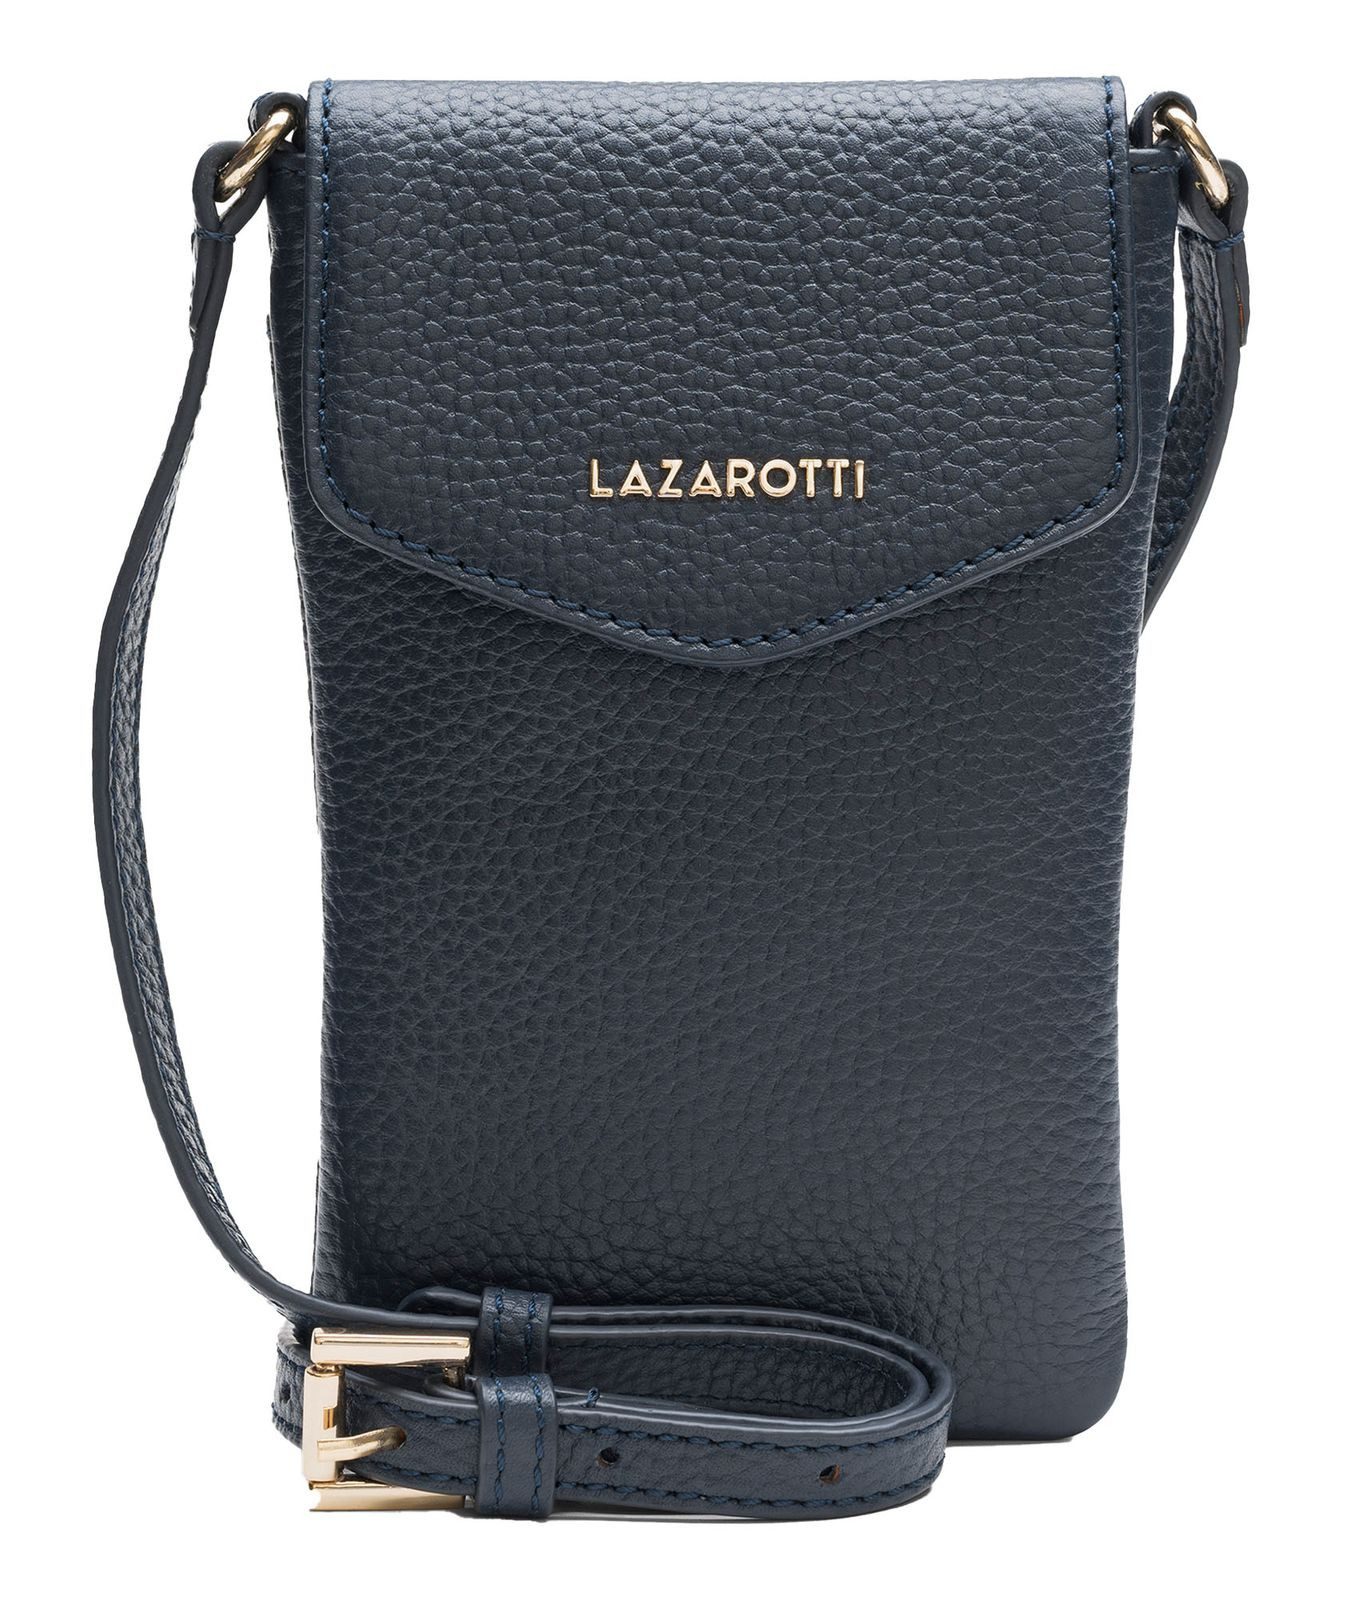 Lazarotti Handytasche Bologna Leather, aus echtem Leder